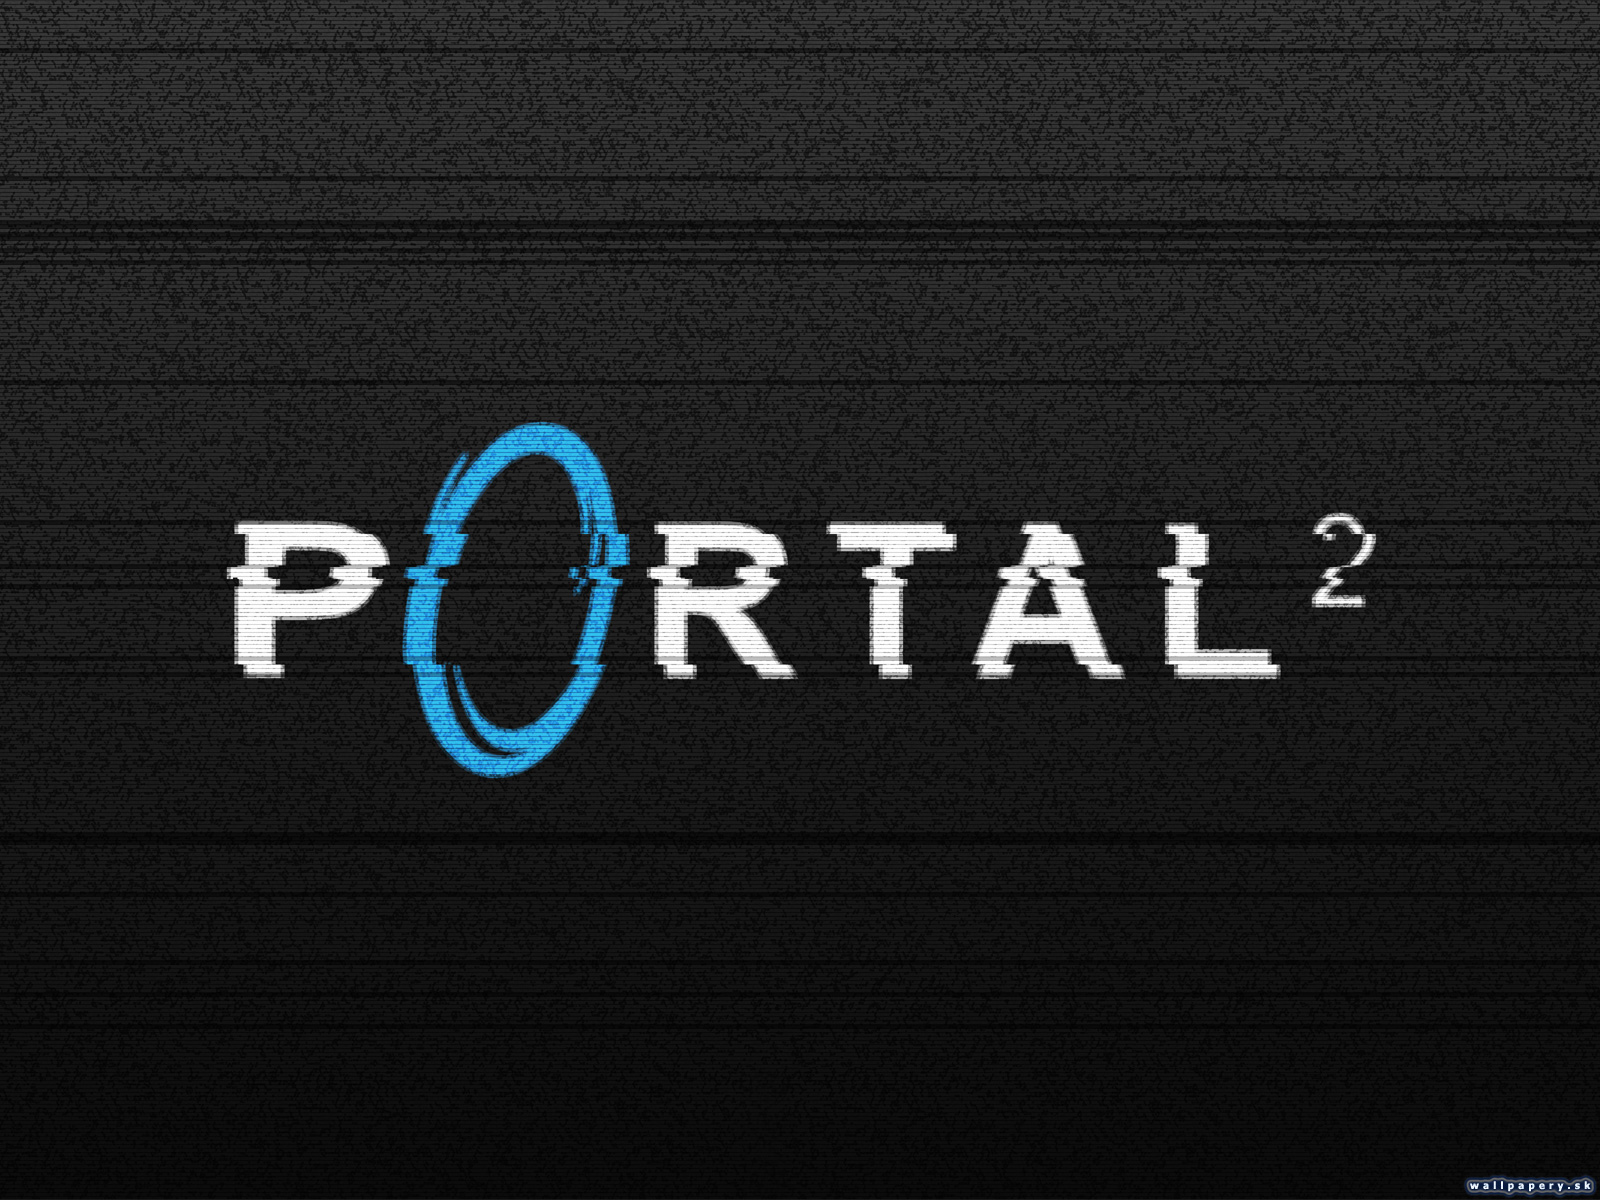 Portal 2 обои. Портал 2 фото на обои. Портал надпись. Портал обои на телефон. Б г портал